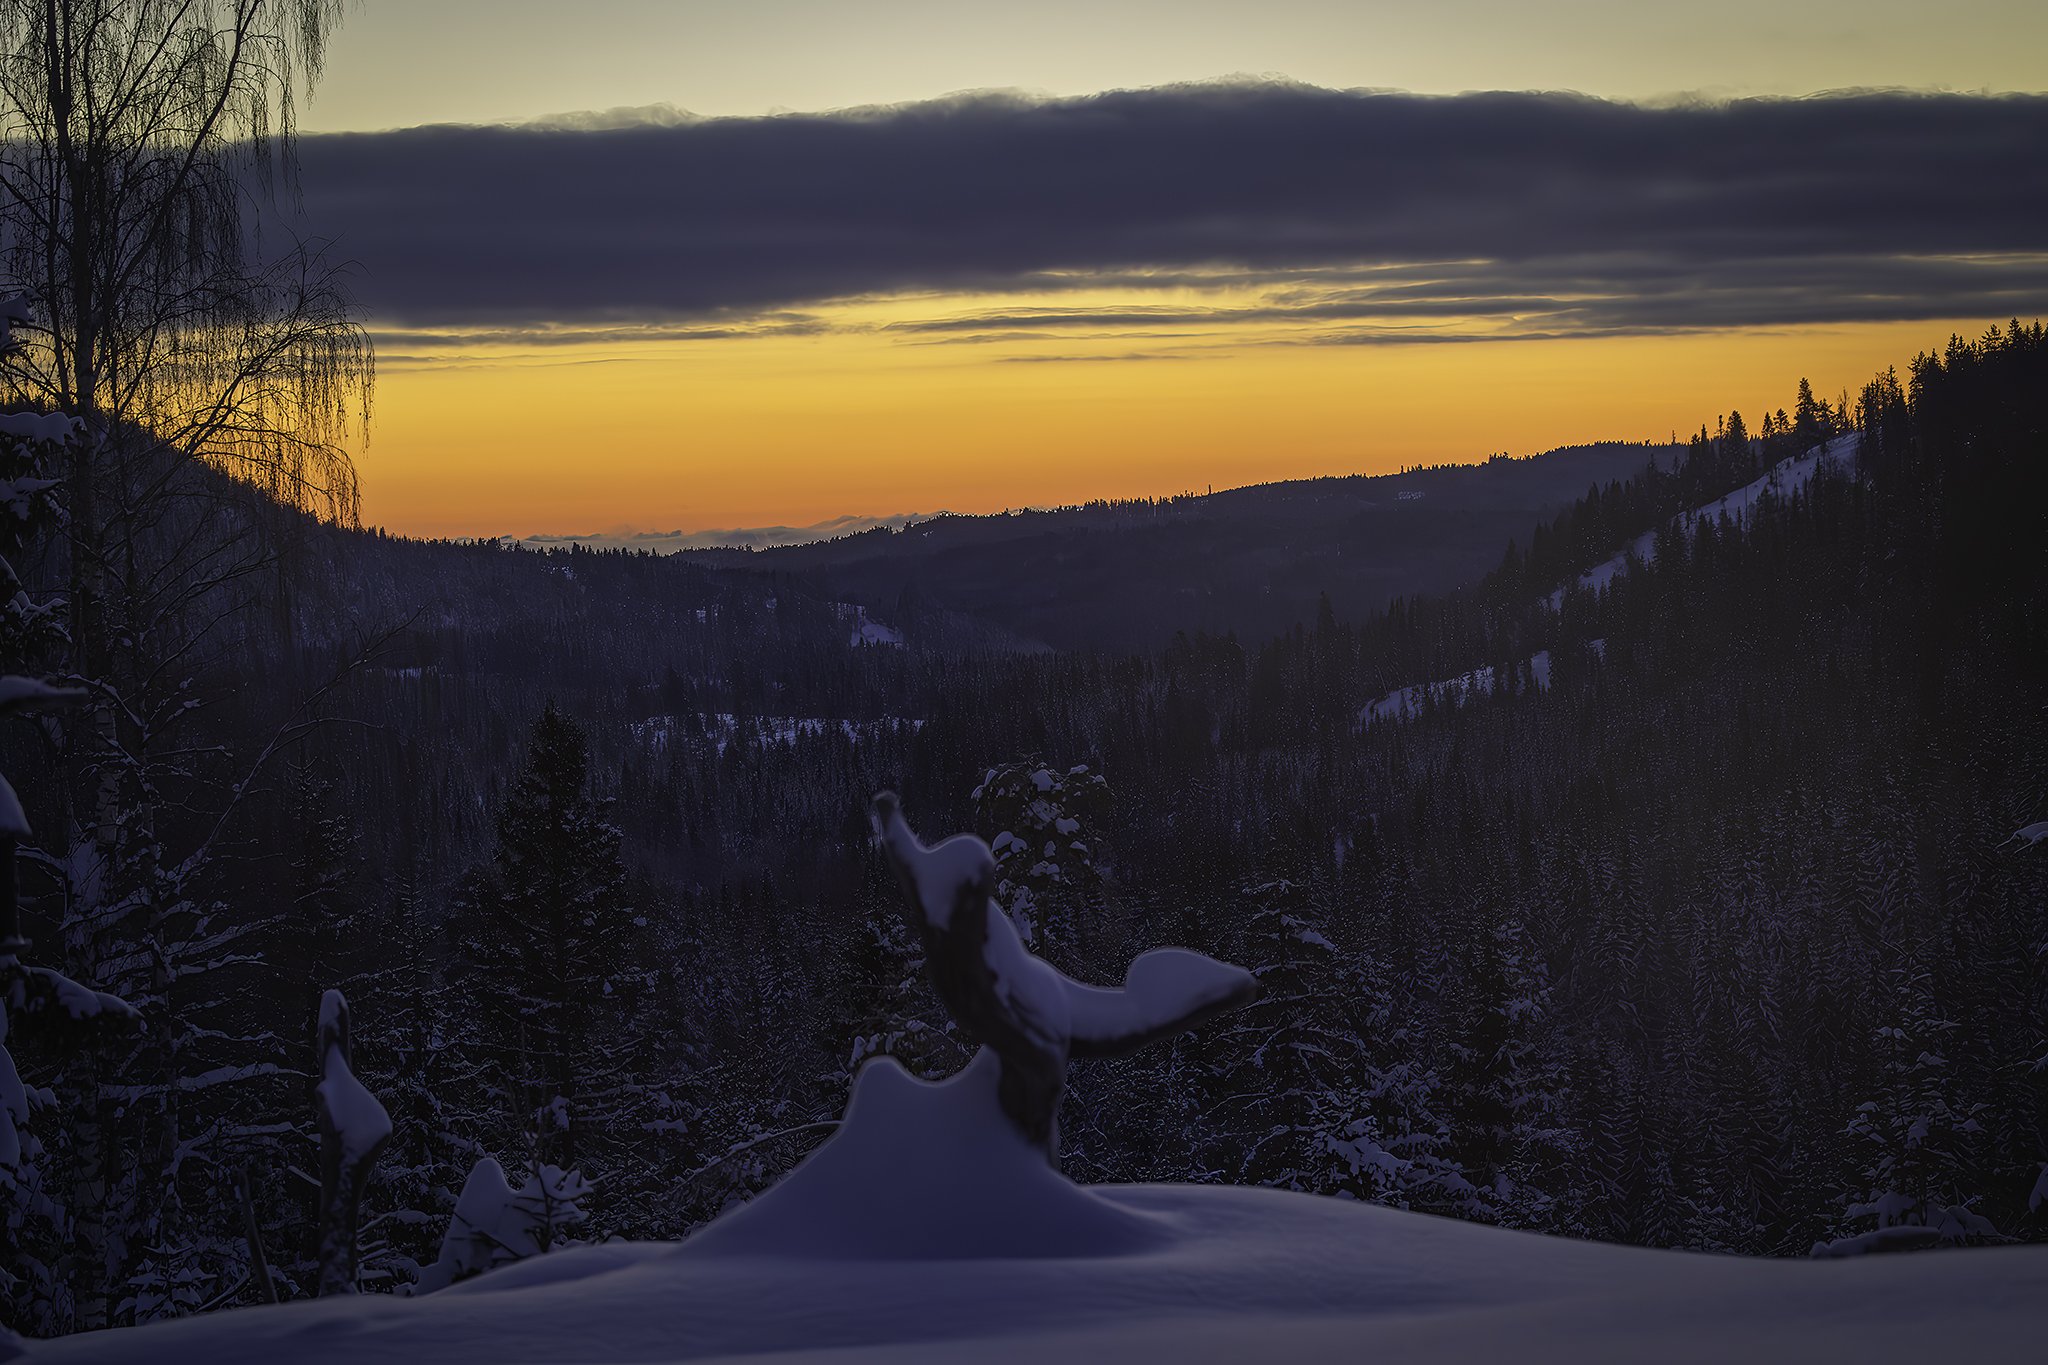 Early morning in the eagle's kingdom, Finnemarka.